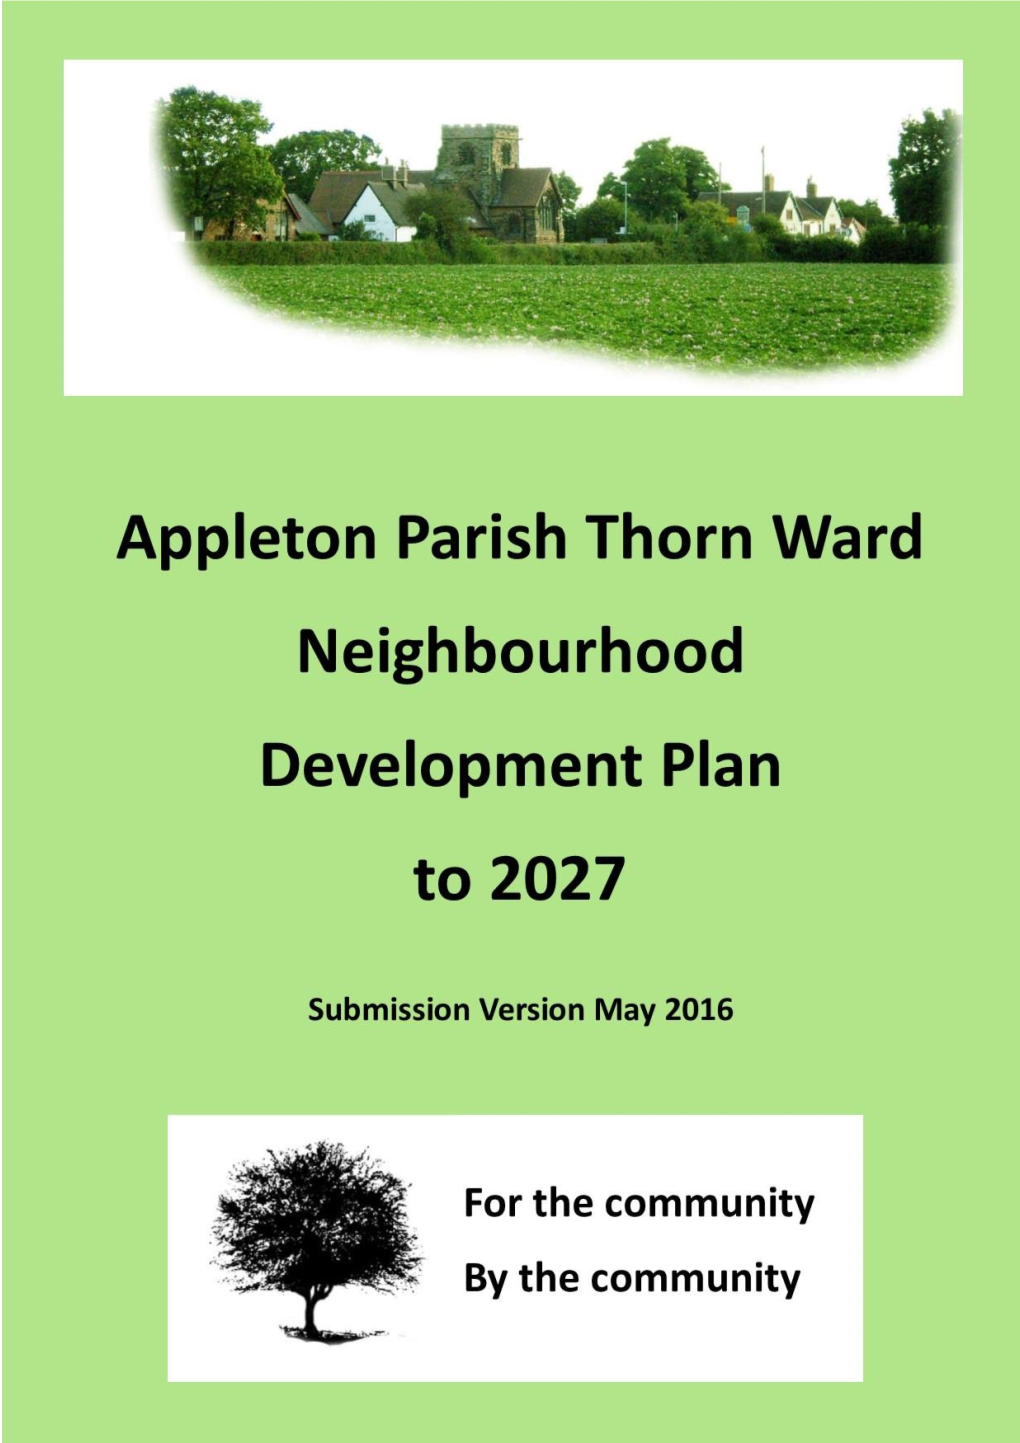 4. Key Issues for Appleton Parish Thorn Ward 17